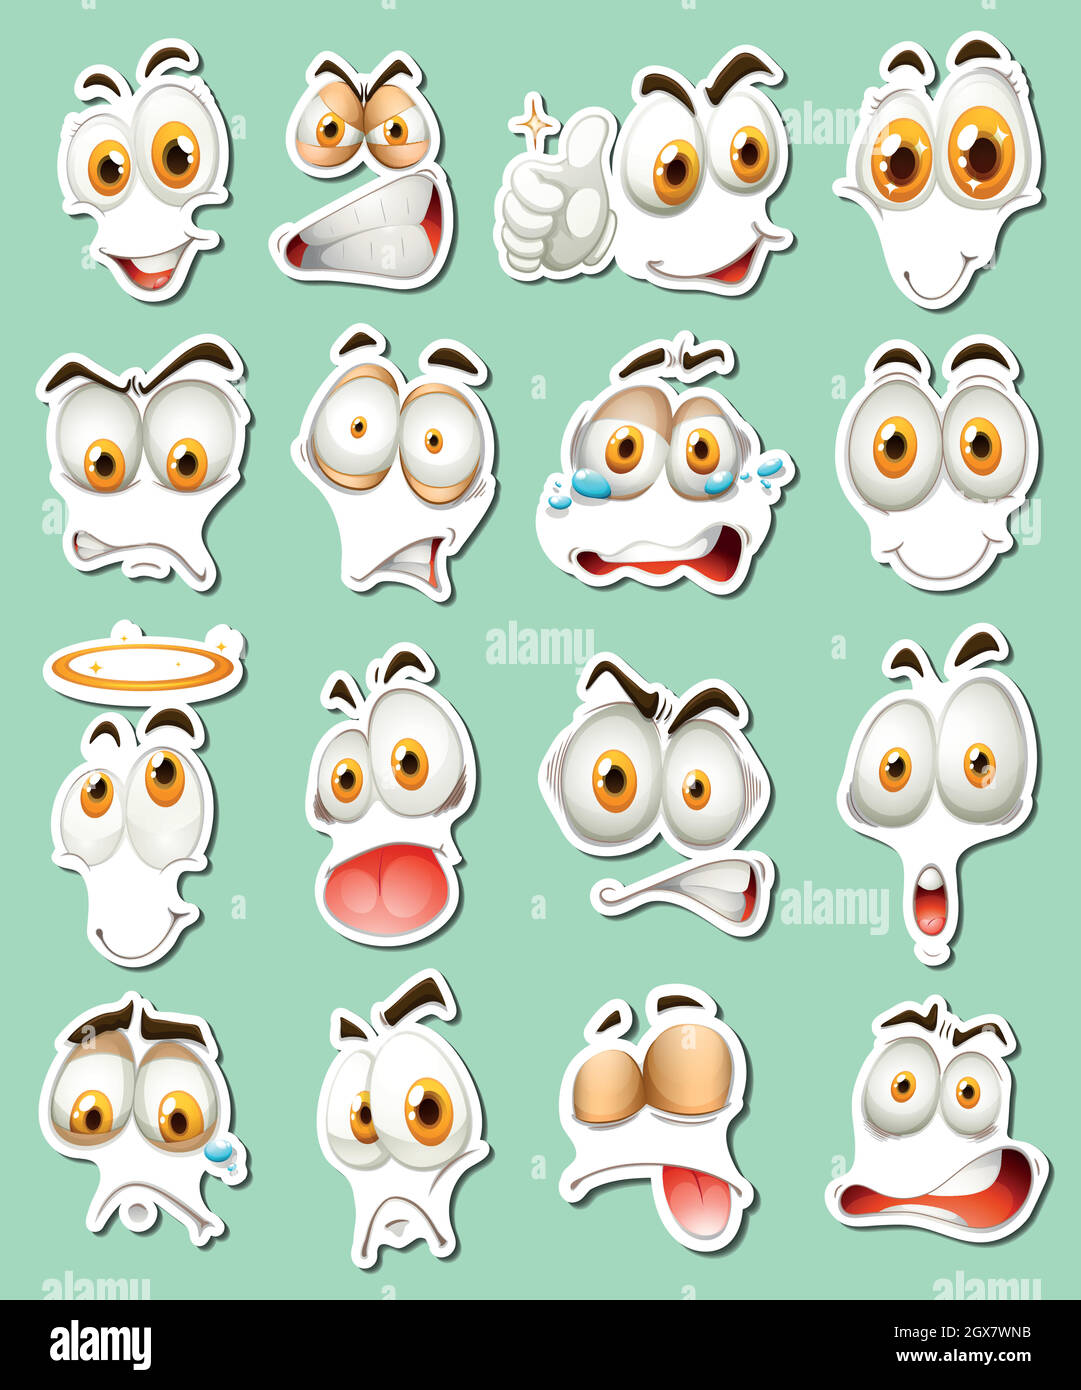 Sticker design for facial expressions Stock Vector